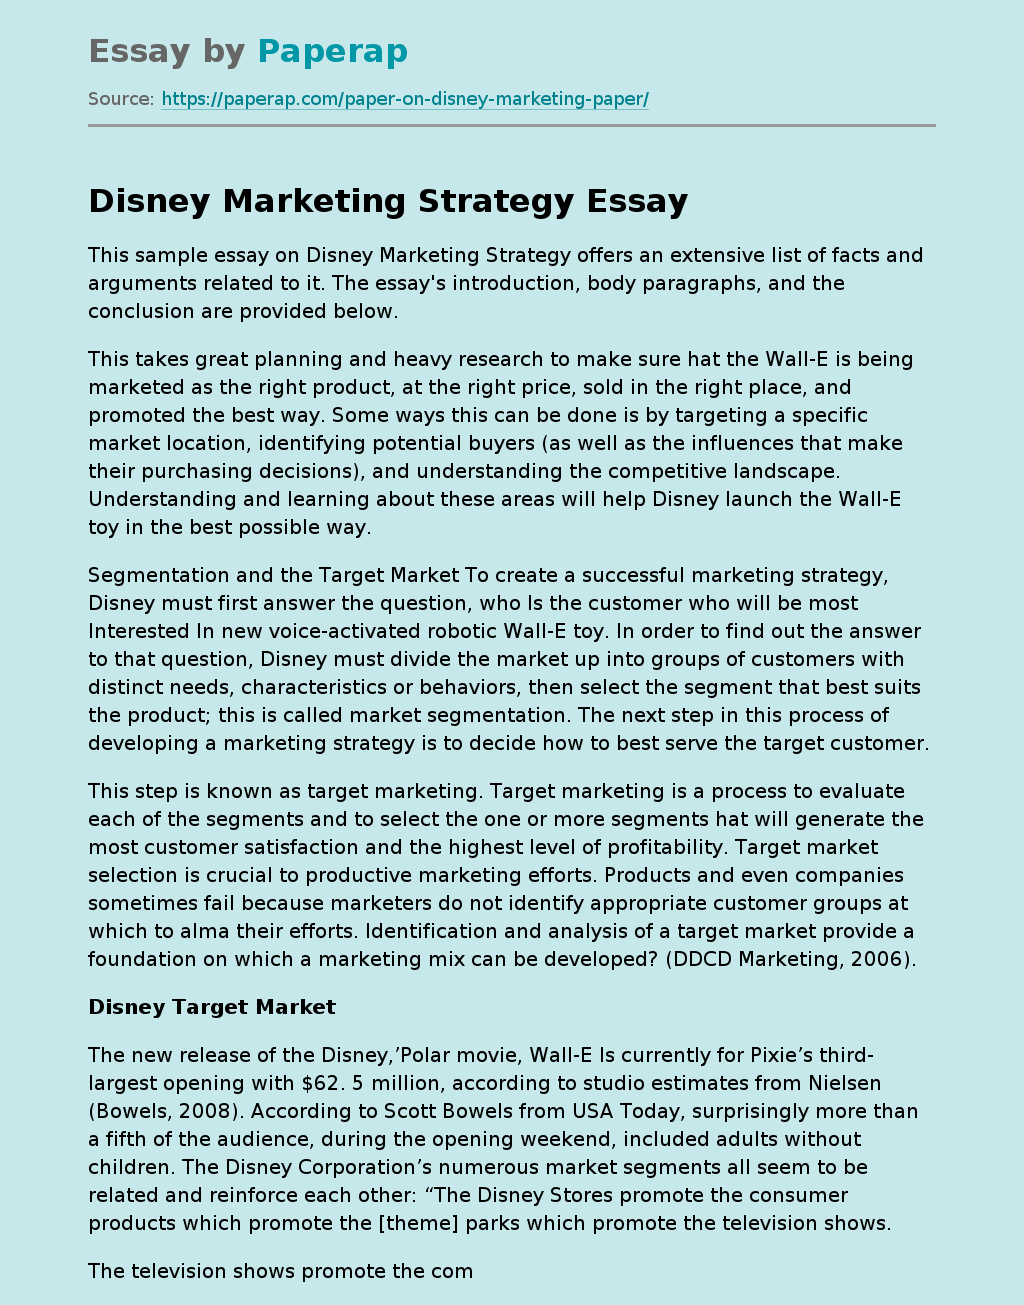 Disney Marketing Strategy